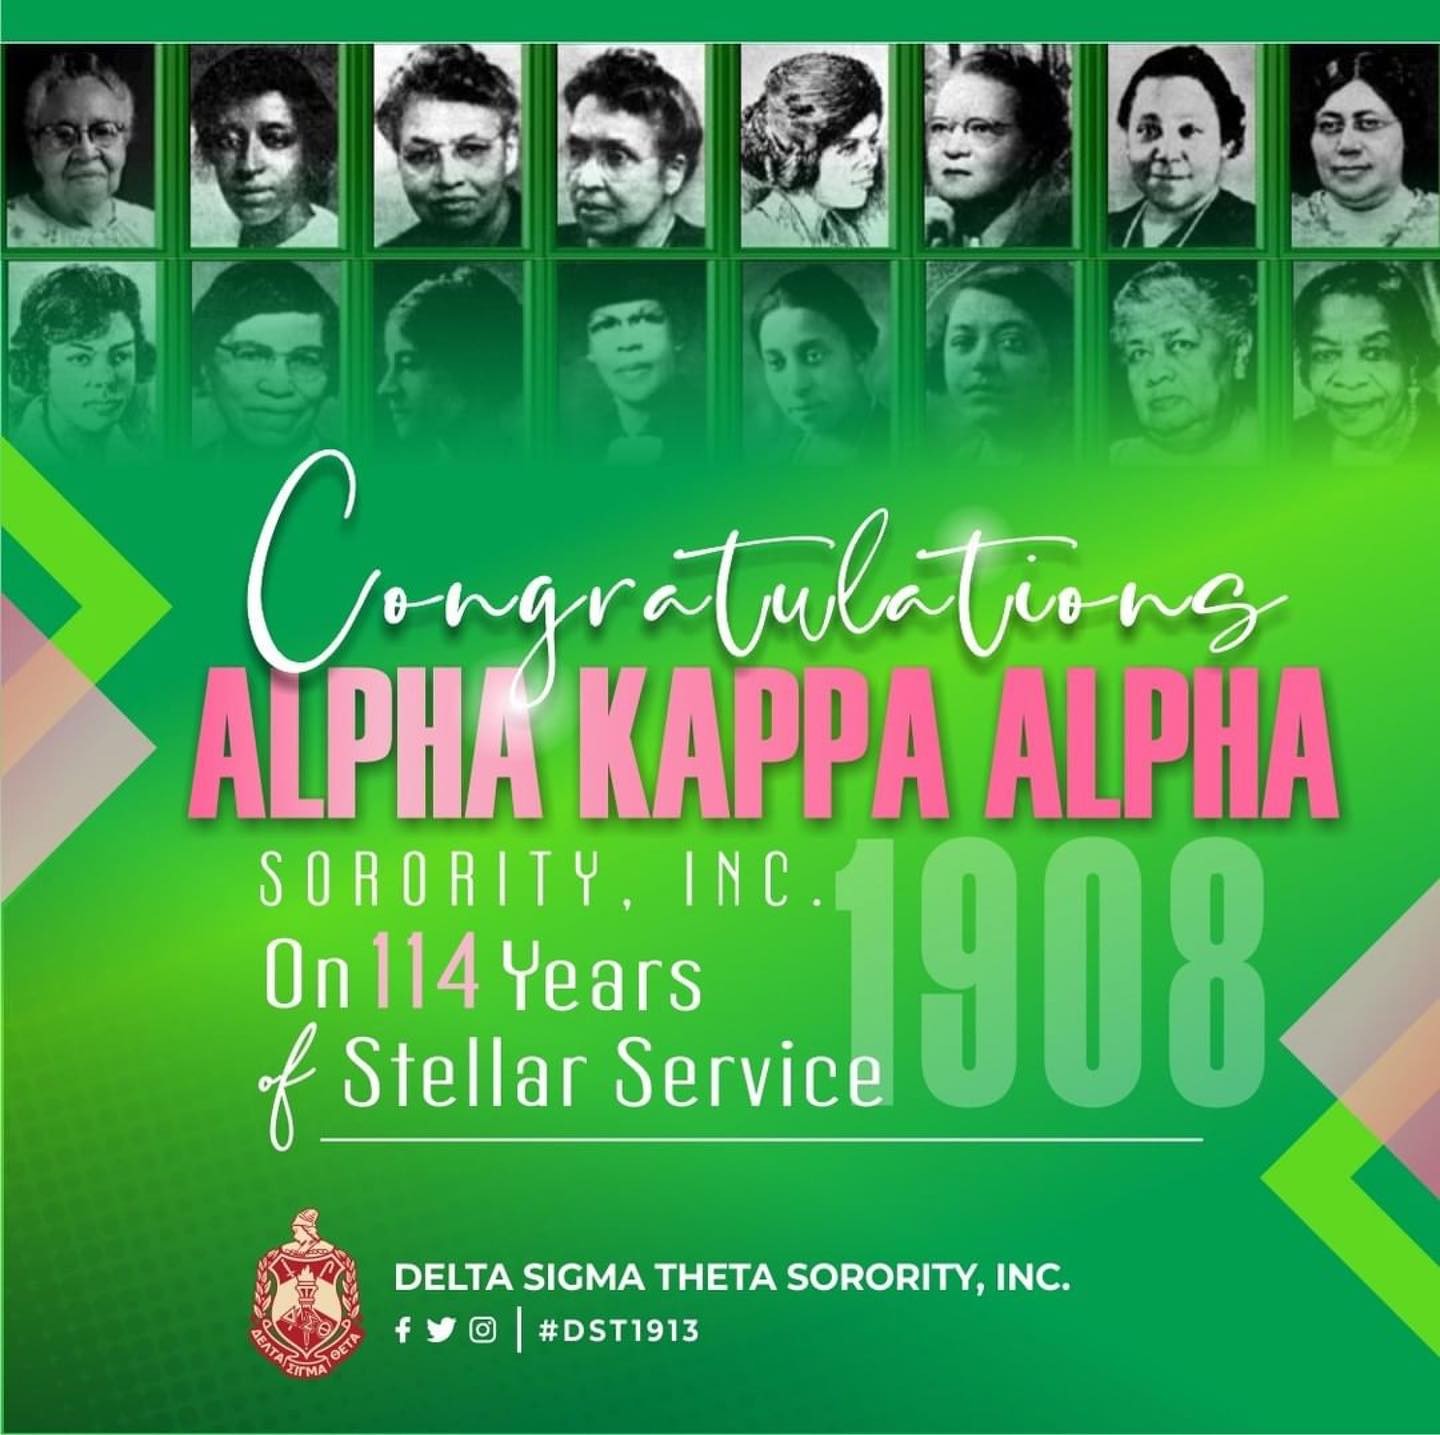 #Repost @dstinc1913
・・・
Congratulations to the amazing women of Alpha Kappa Alpha Sorority, Incorporated on 114 years of stellar service! #AKA @akasorority1908